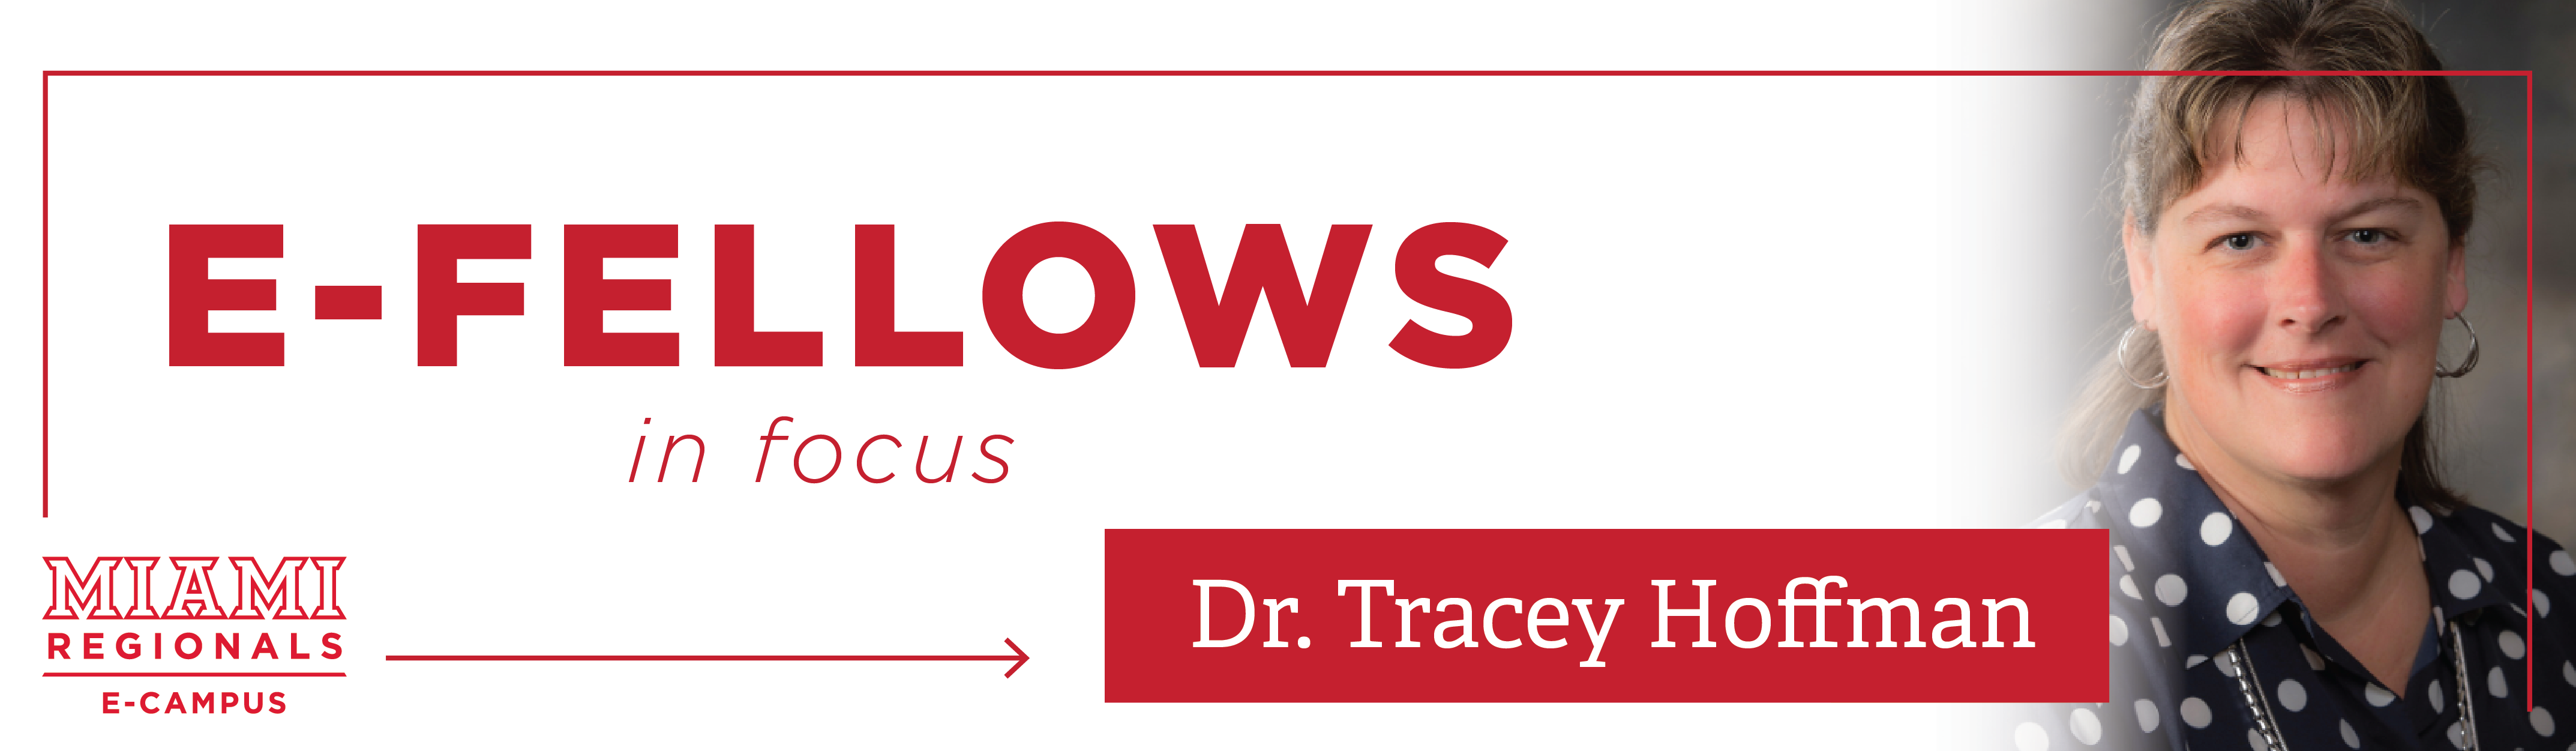 E-Fellows in Focus: Dr. Tracey Hoffman Miami Regionals E-Campus